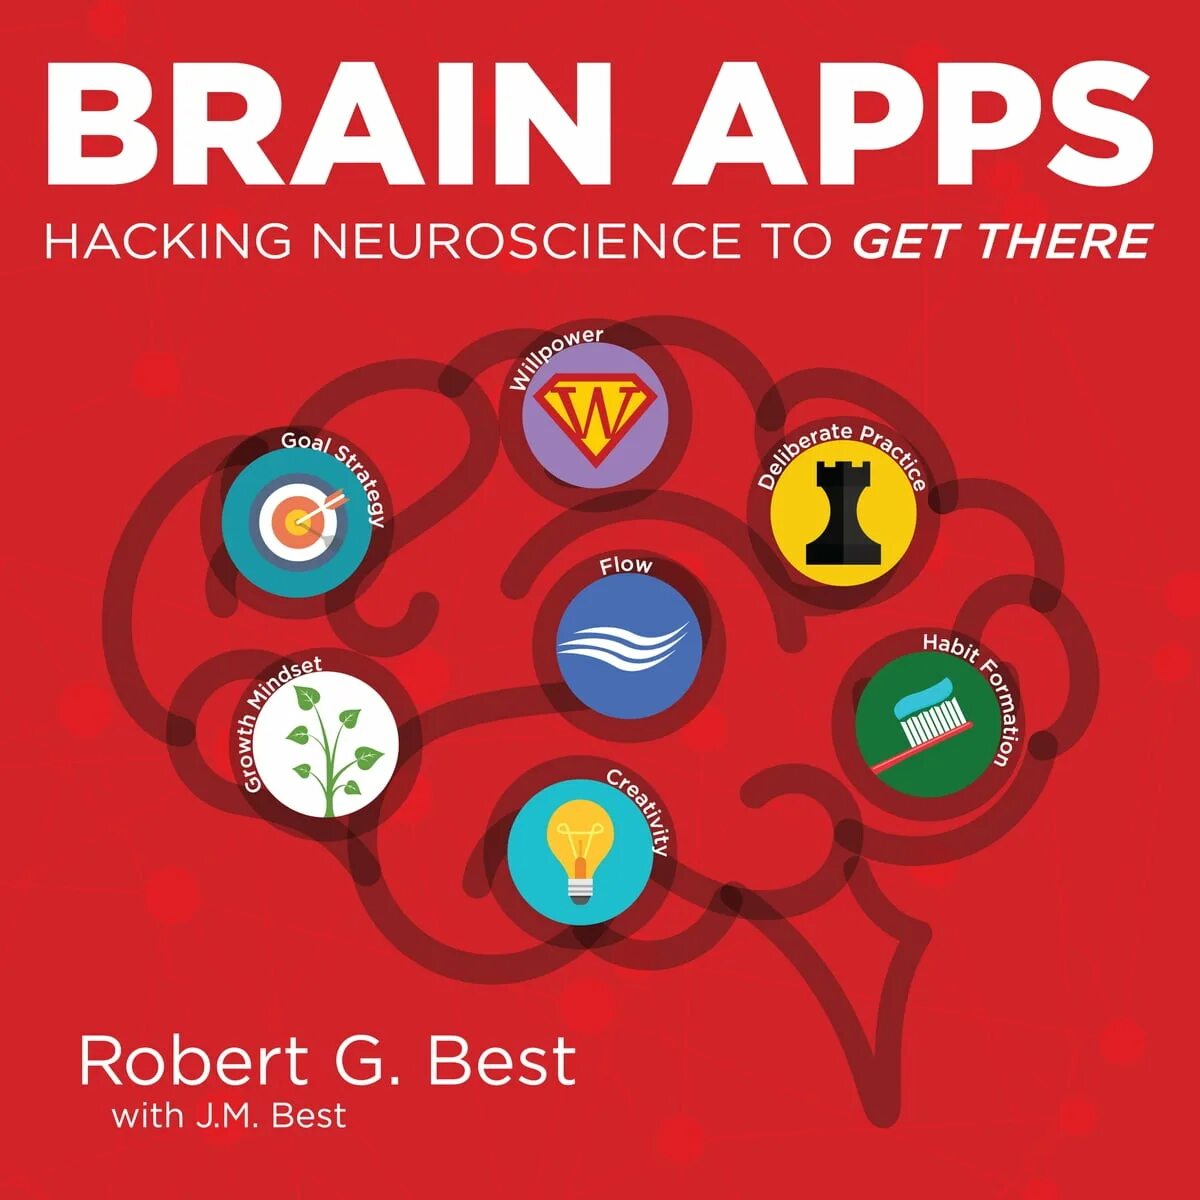 Brain apps. Brain Hacking. Книга мозг. BRAINAPP картинка. Приложение brain